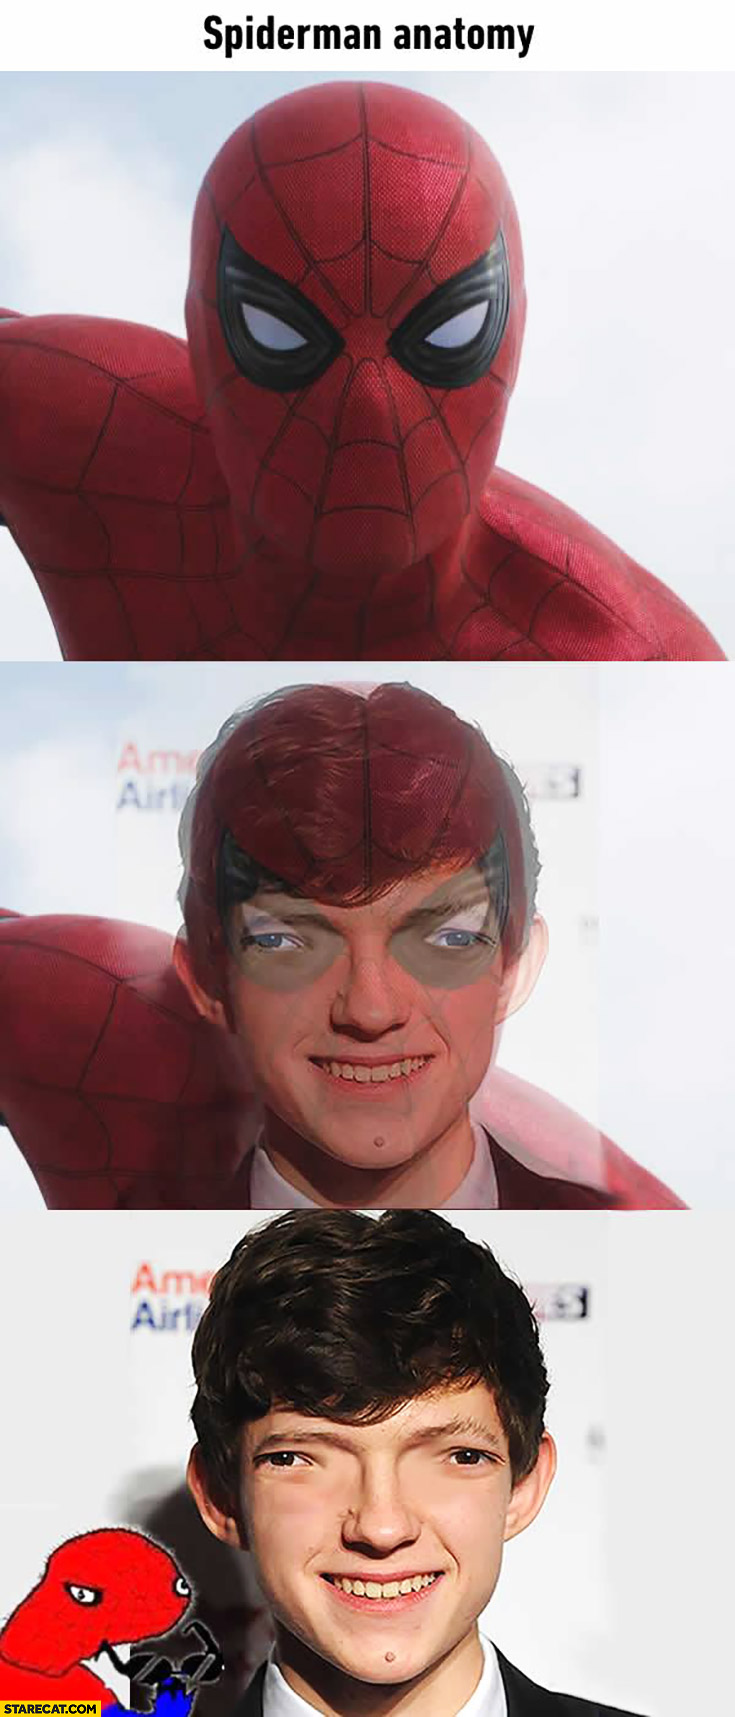 Spiderman anatomy eyes fail